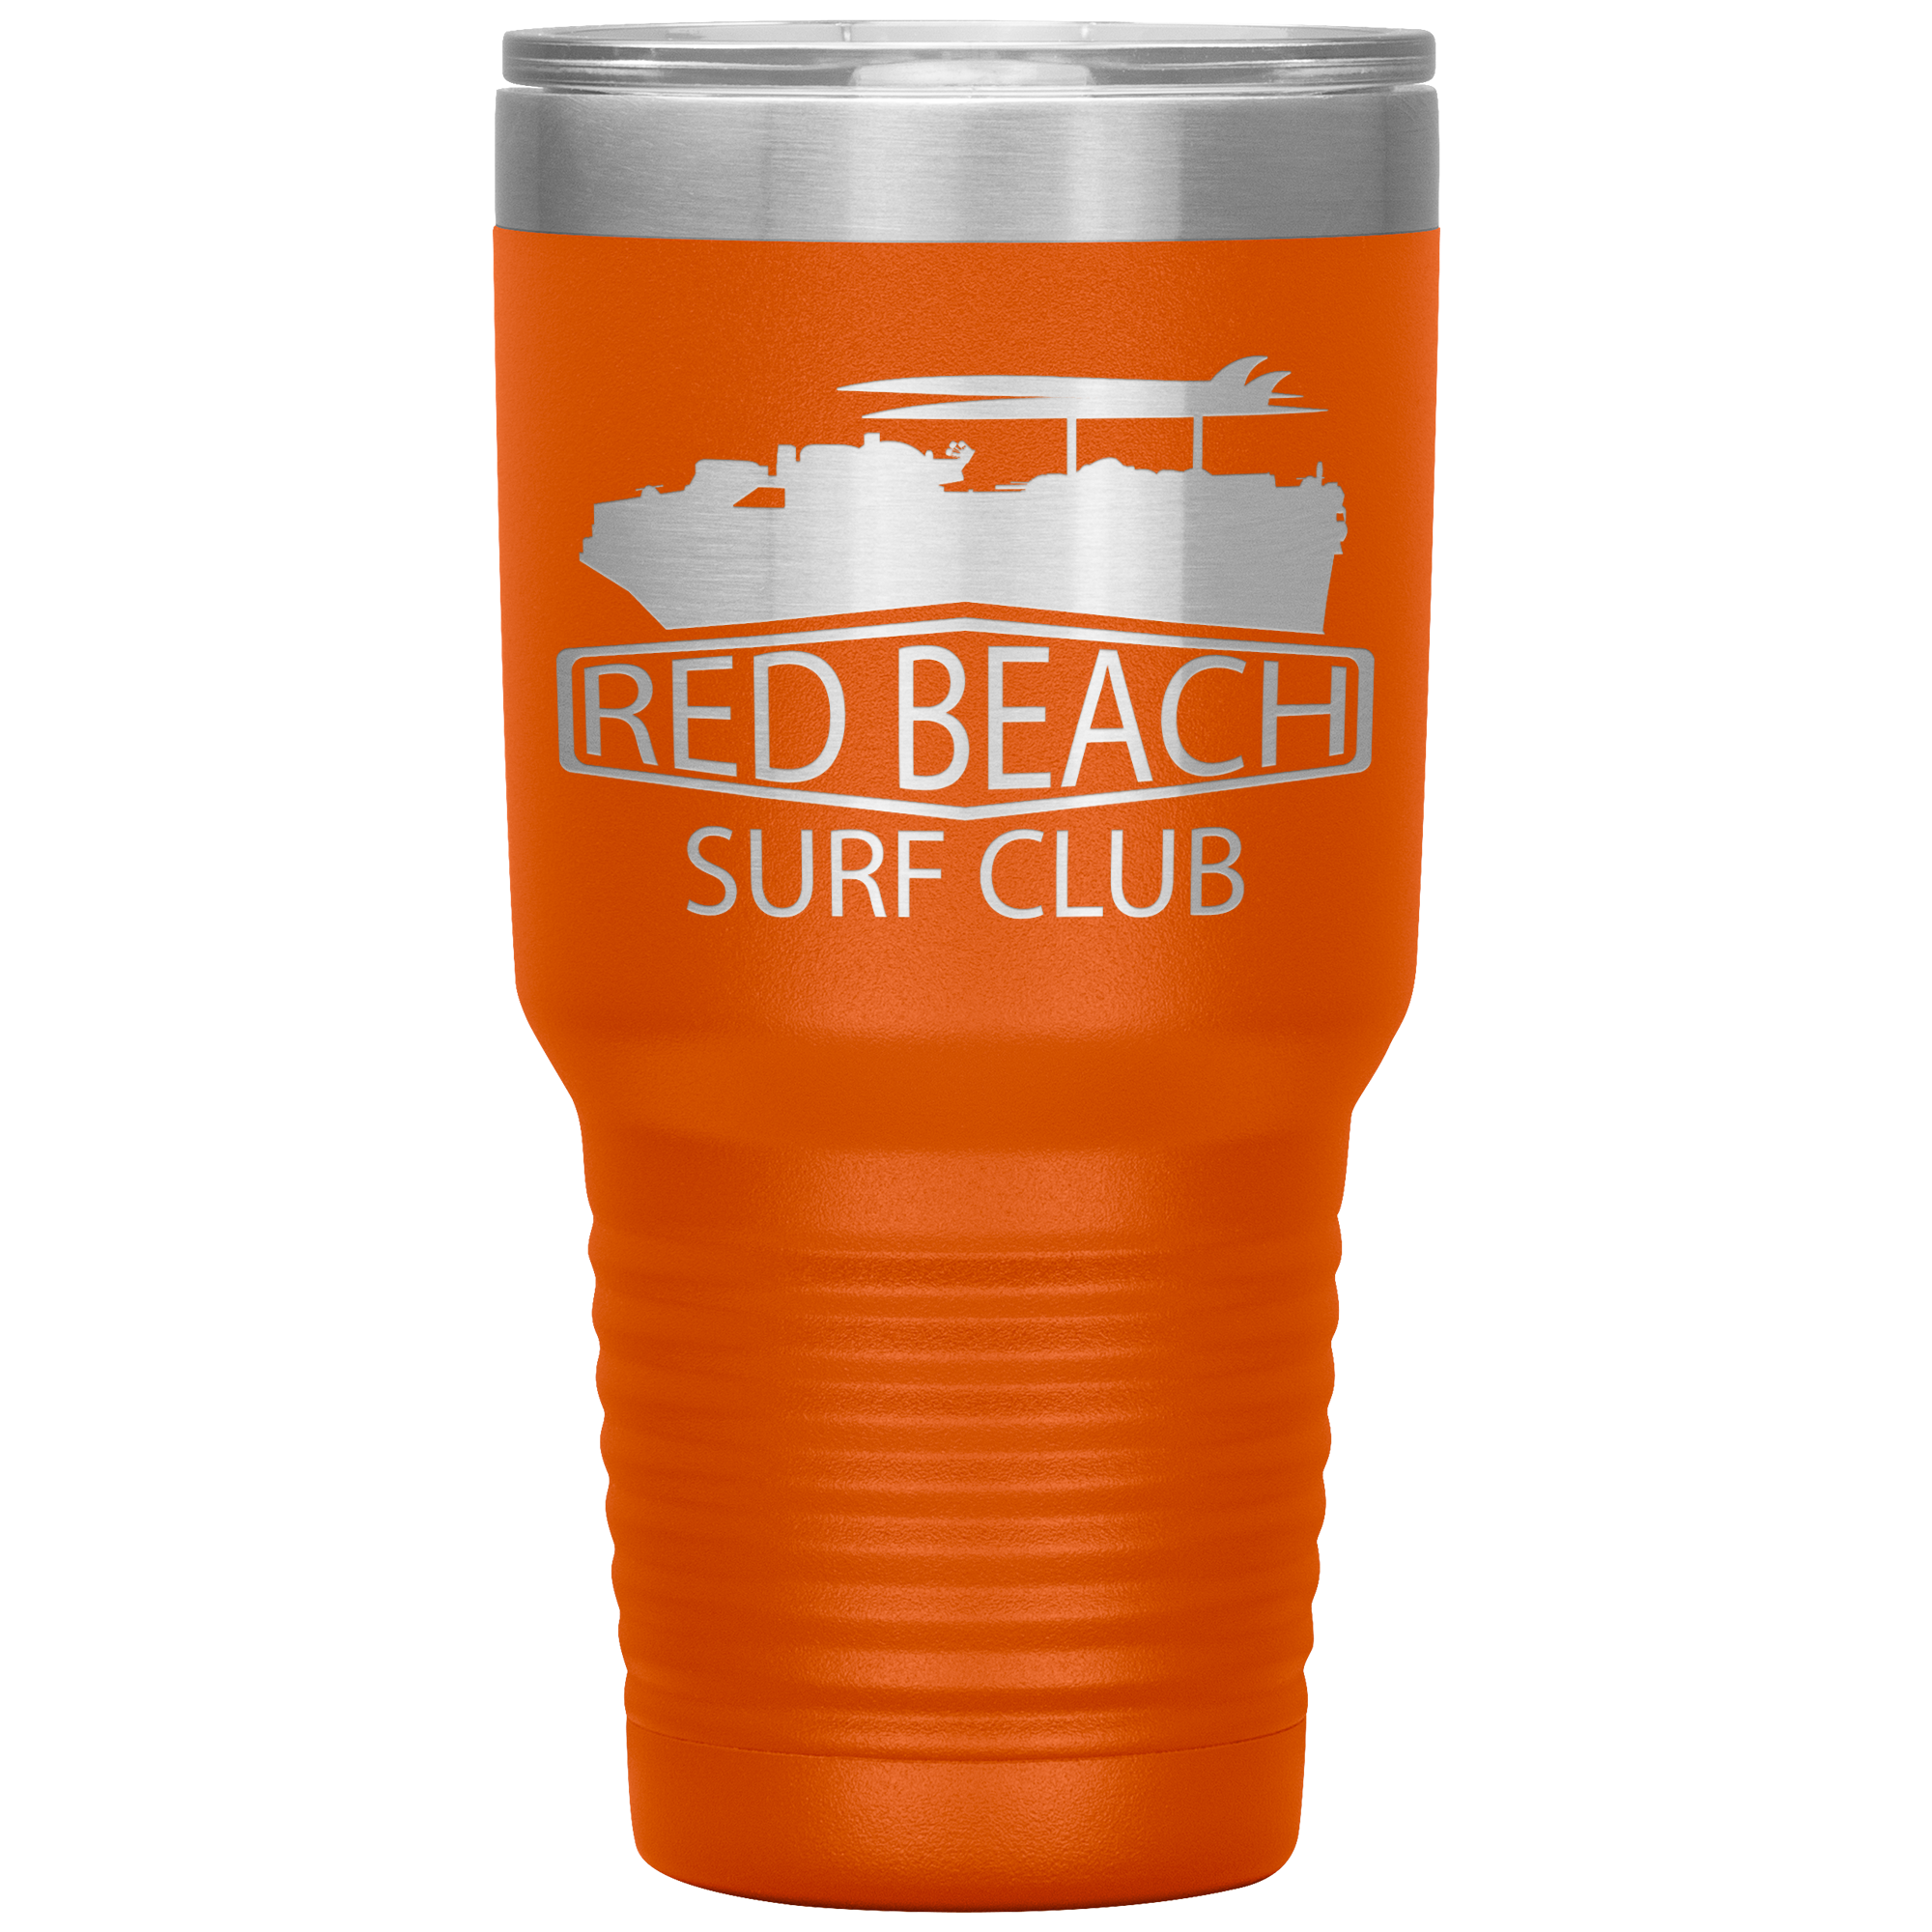 RED BEACH SURF CLUB AAV 30 oz POLAR CAMEL TUMBLER